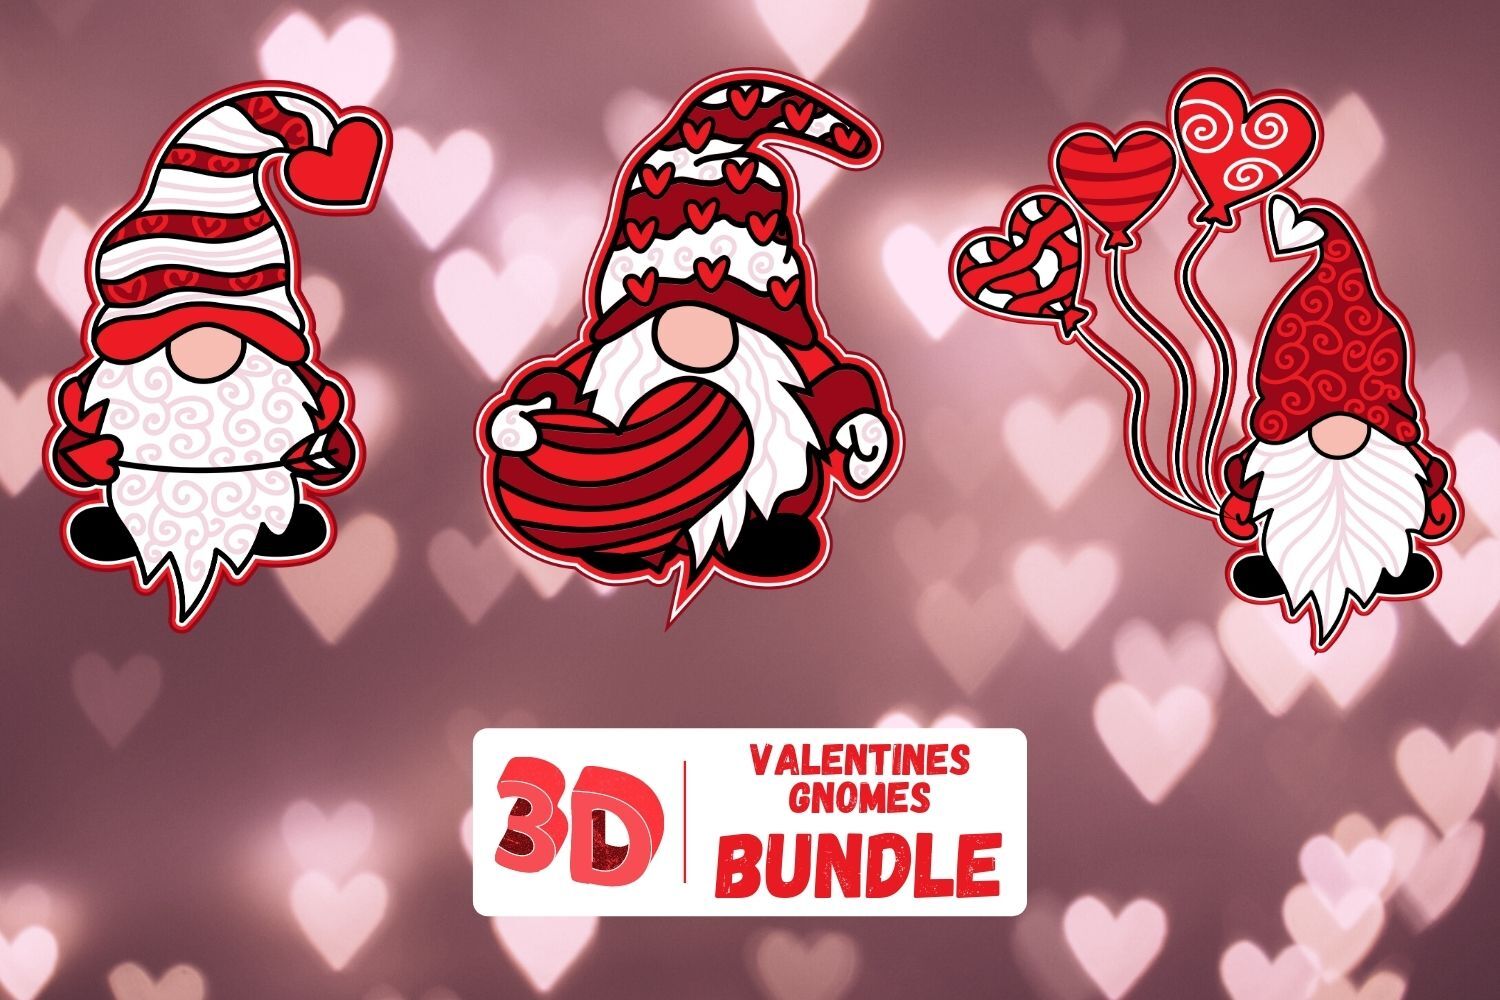 Download 3D Valentine Gnome SVG Bundle By SvgOcean | TheHungryJPEG.com